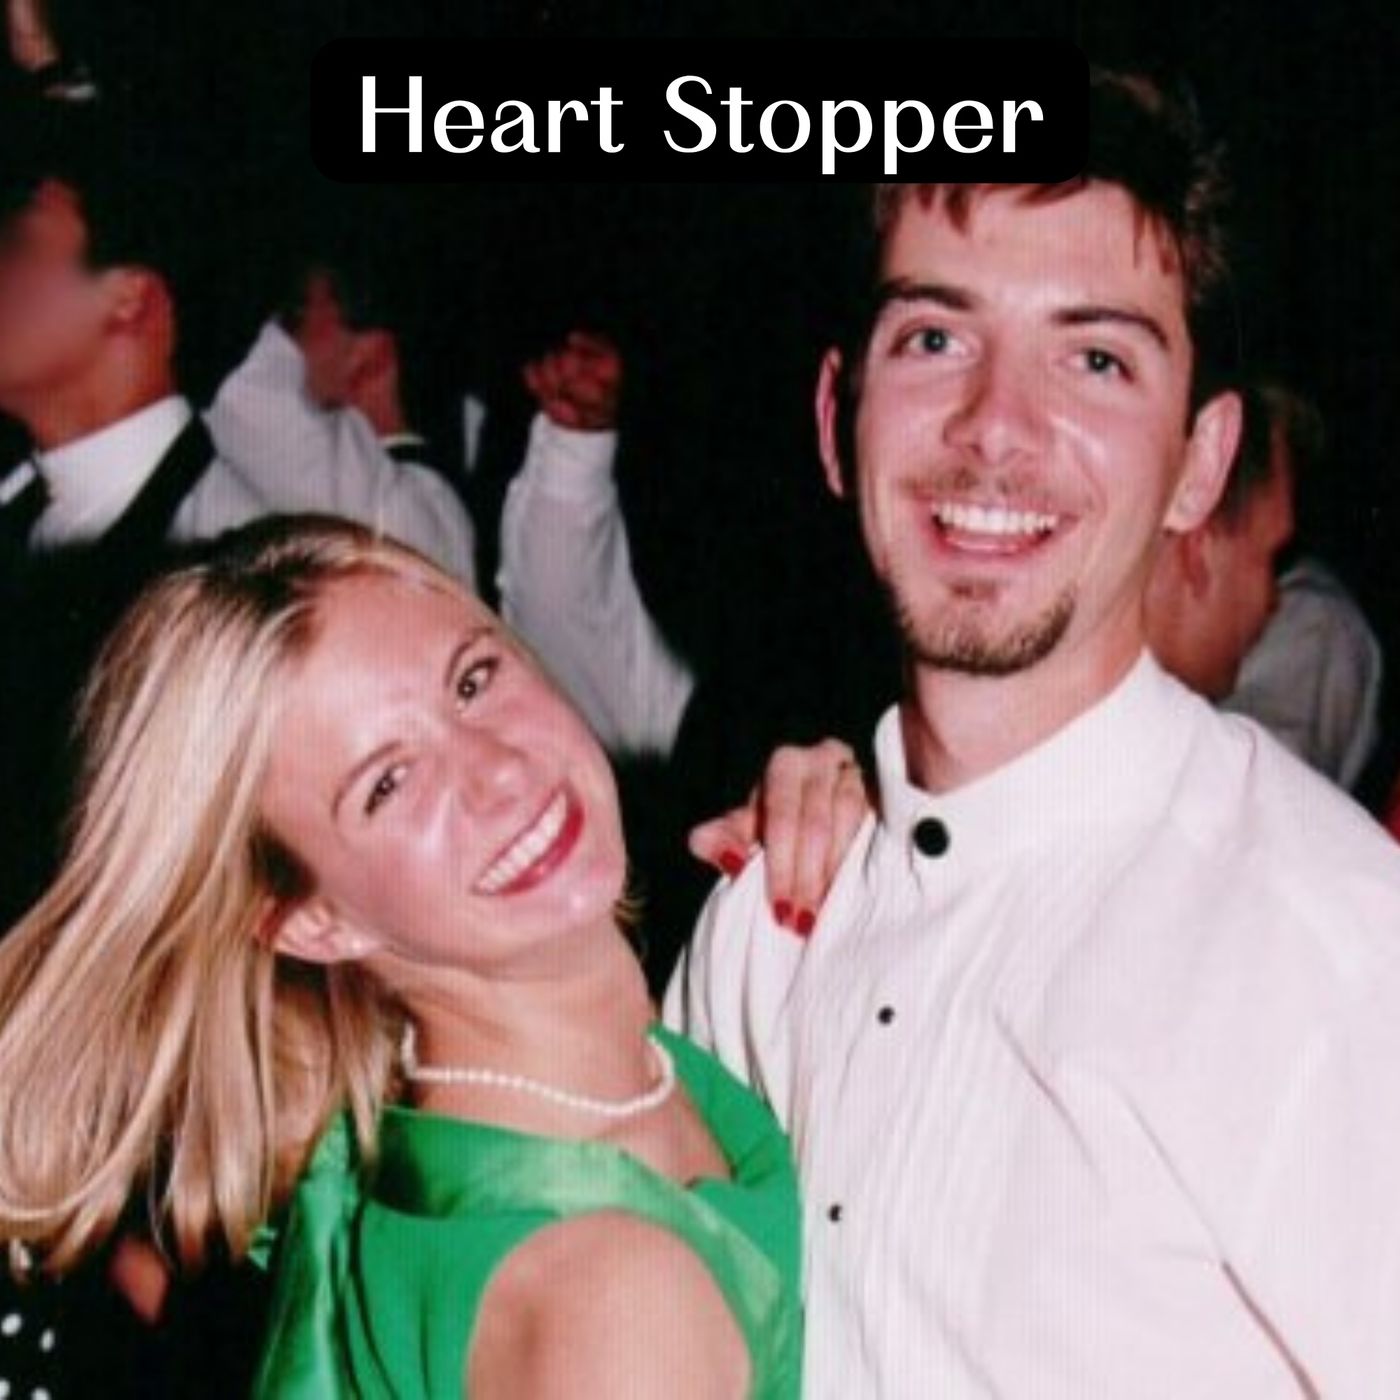 Heart Stopper: The Death of Greg de Villers